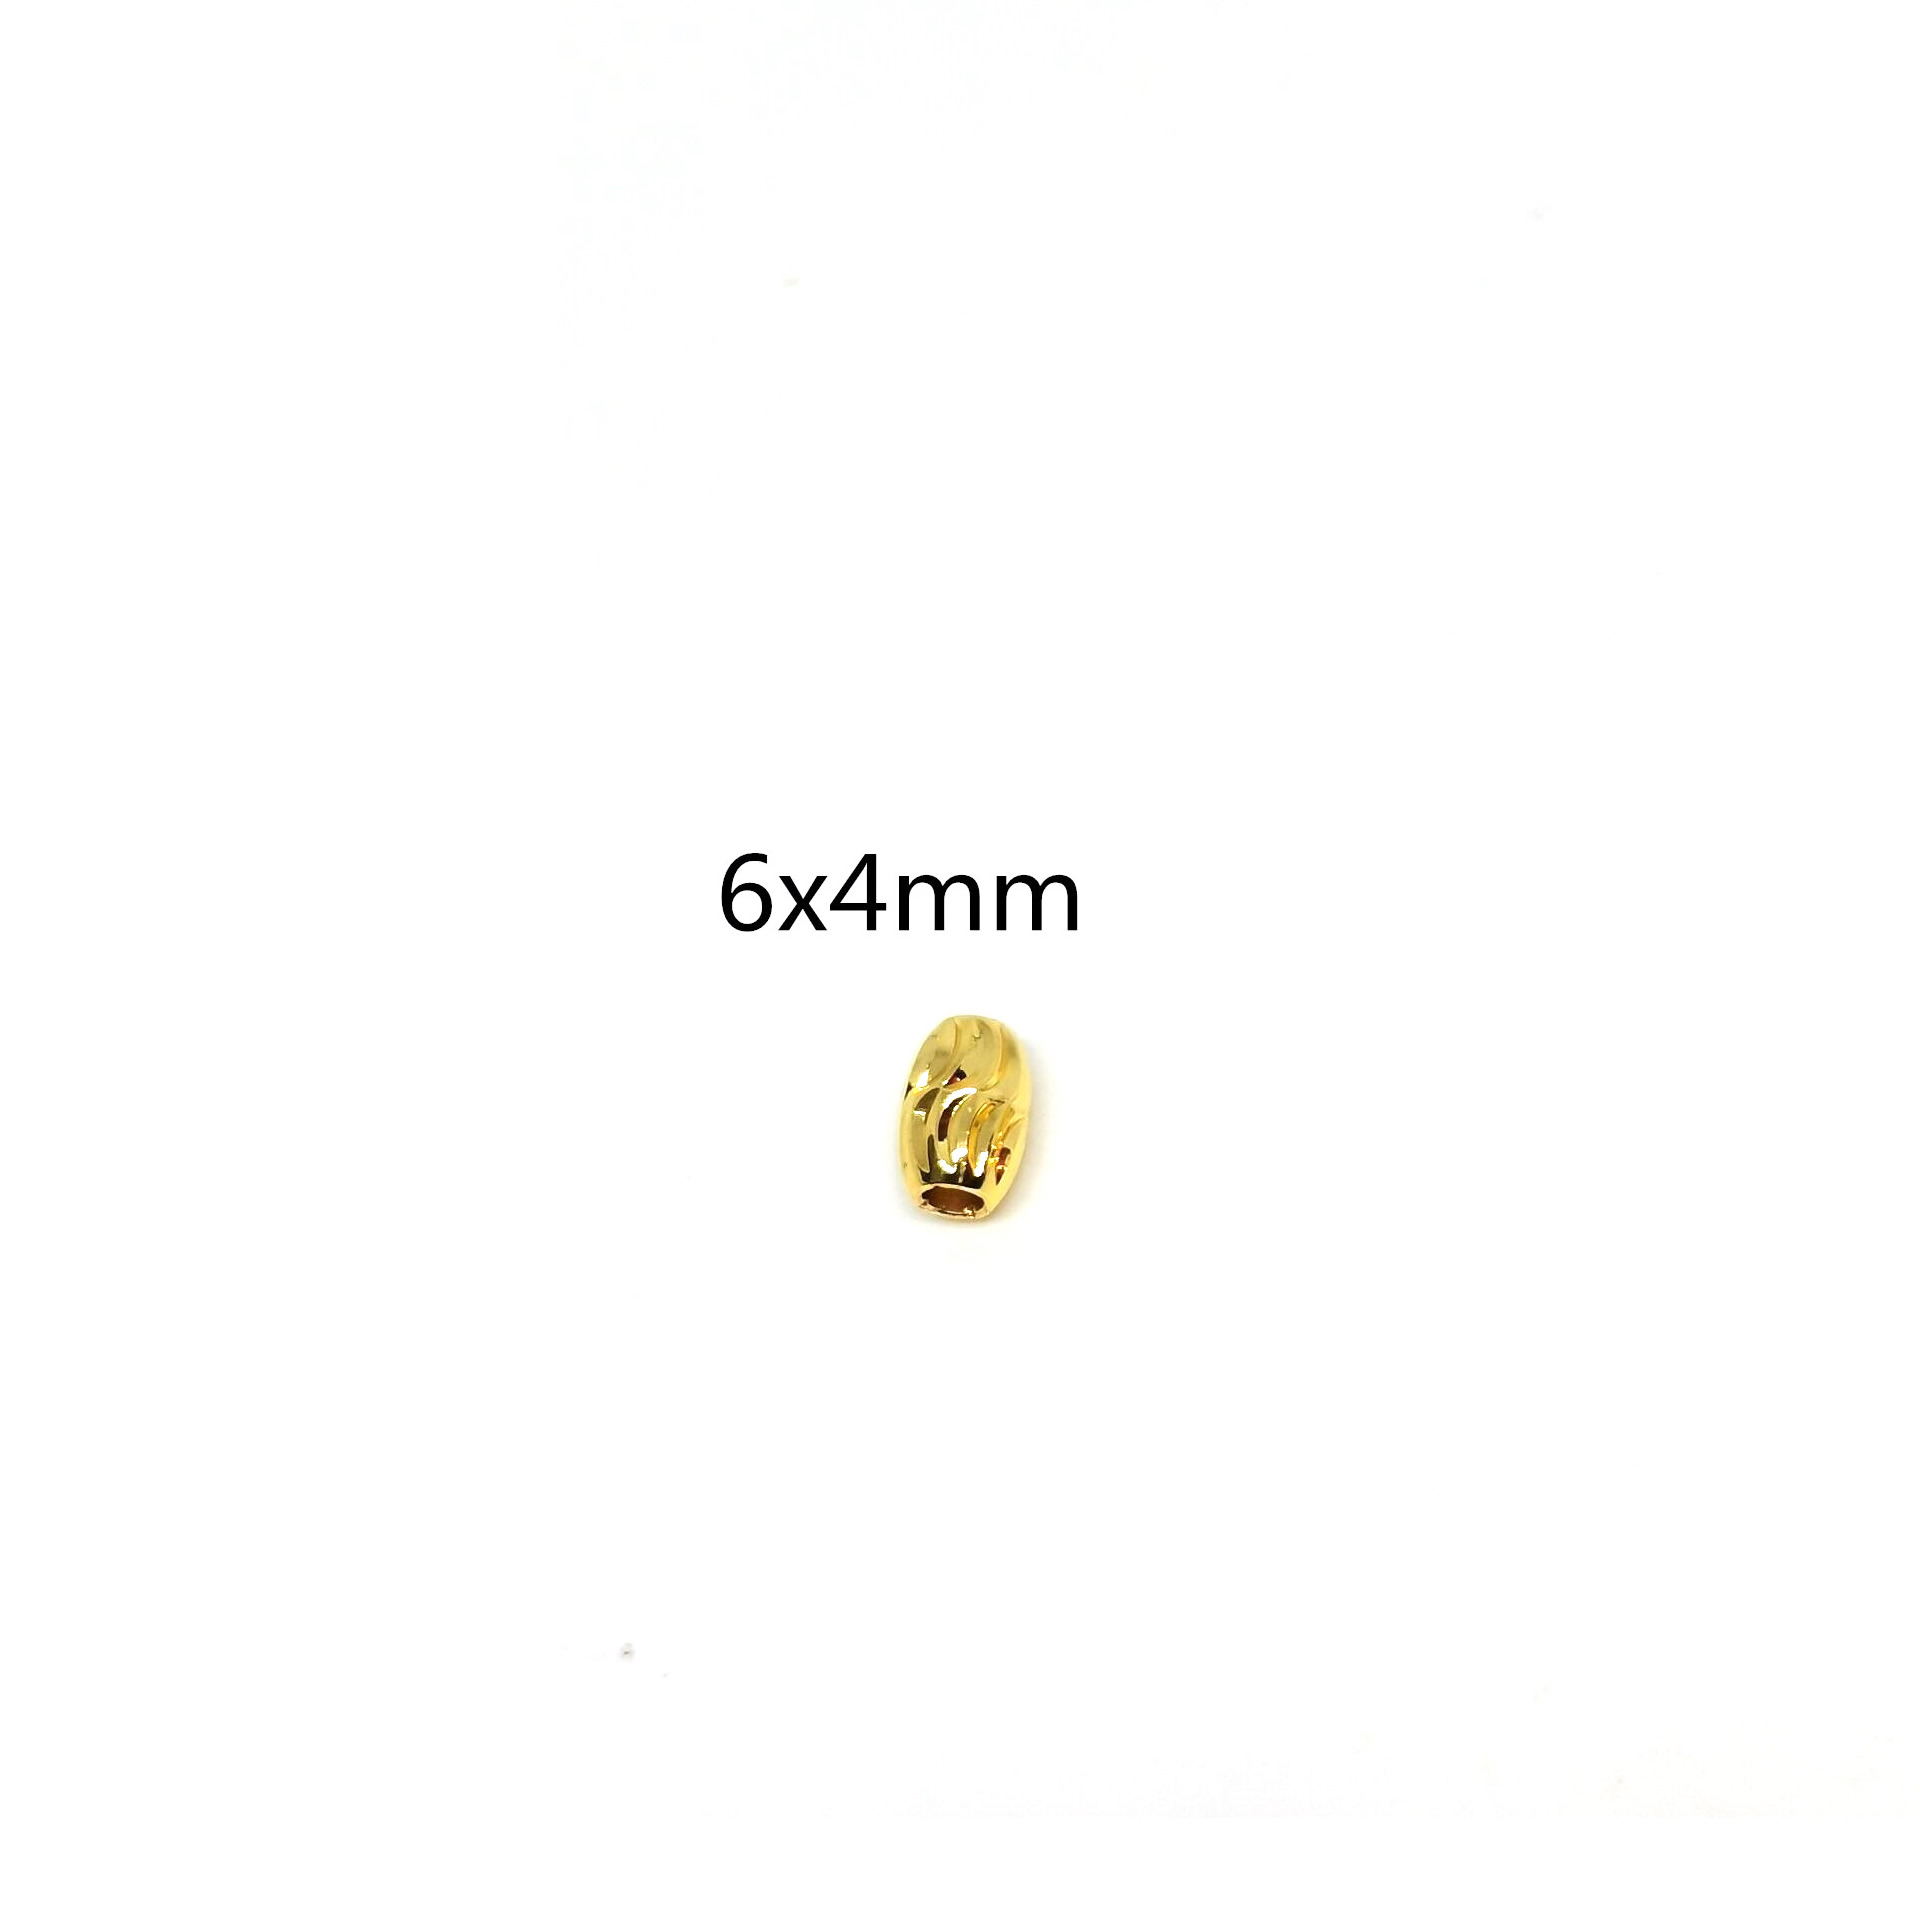 6x4mm